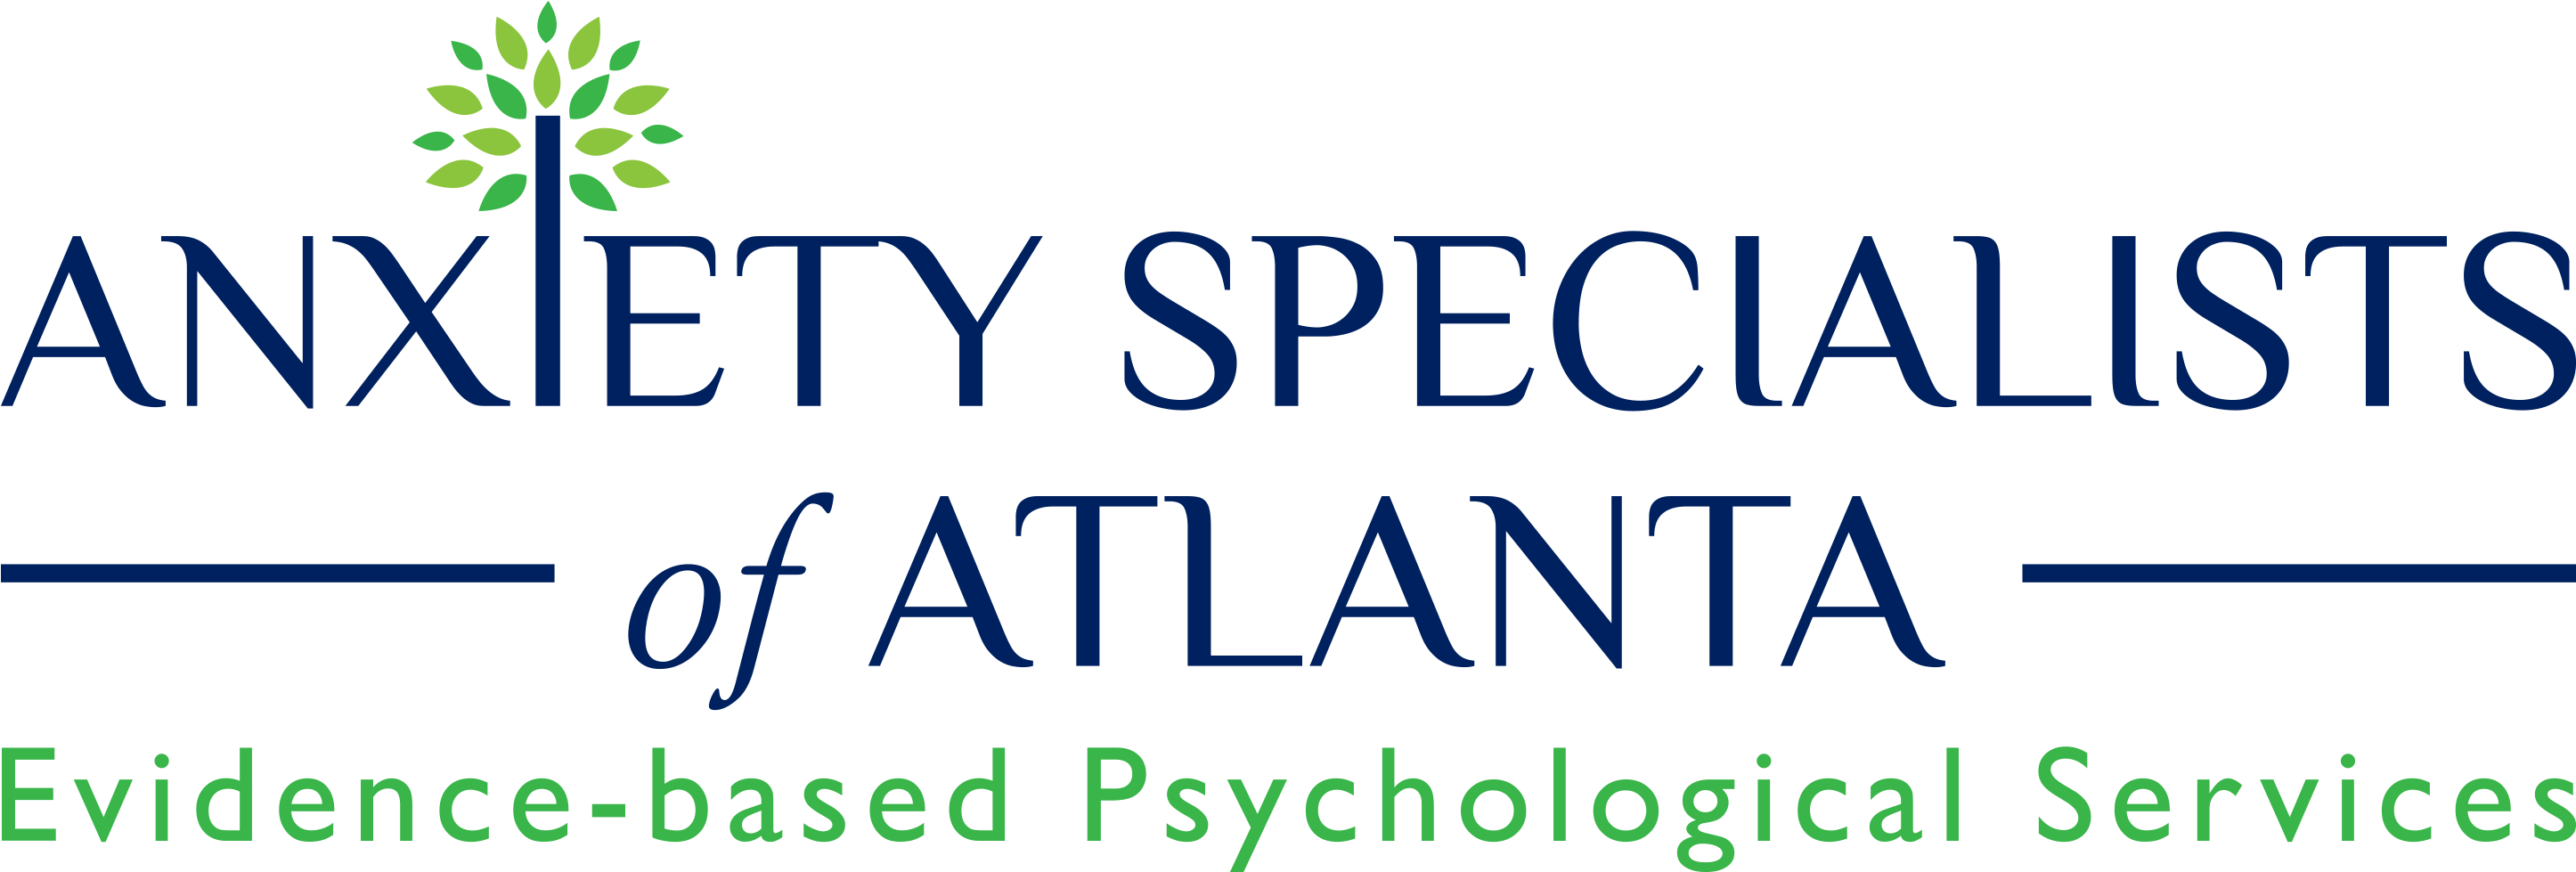 Anxiety Specialists Atlanta Logo PNG